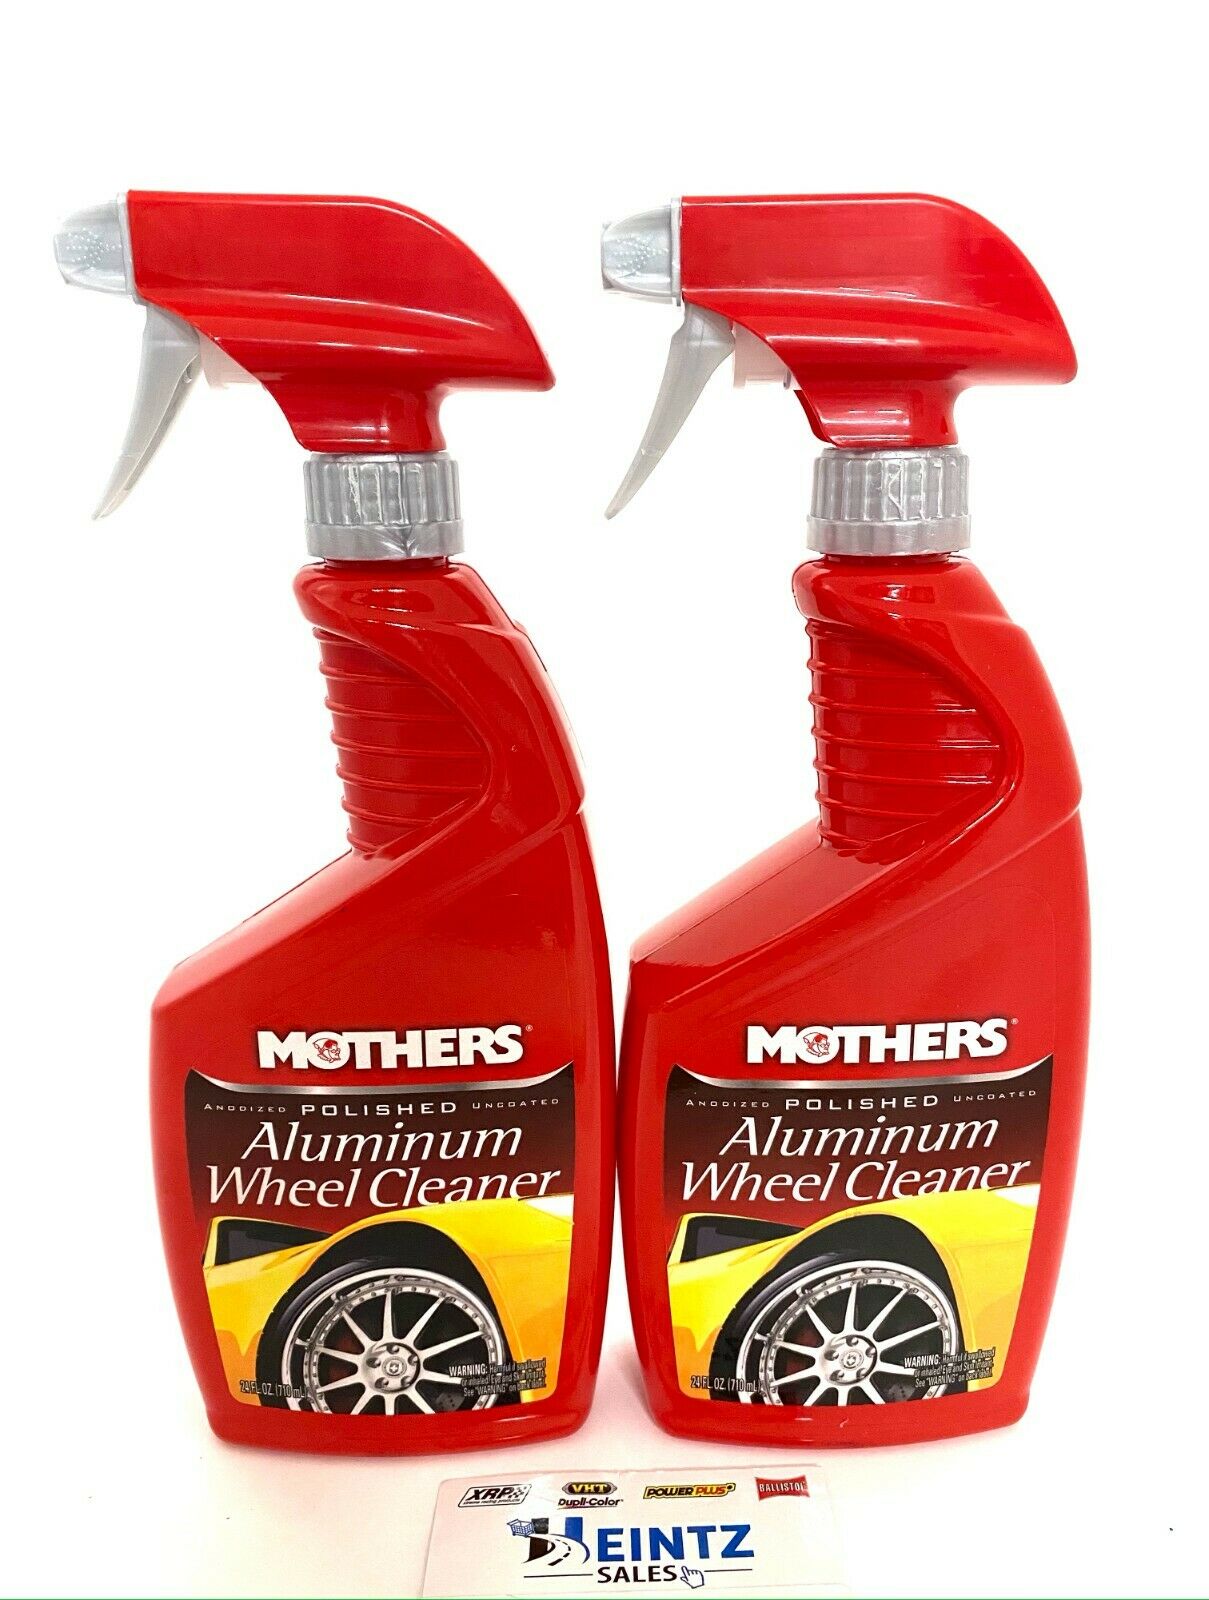 MOTHERS 06024 Polished Aluminum Wheel Cleaner 2 PACK - Dissolves